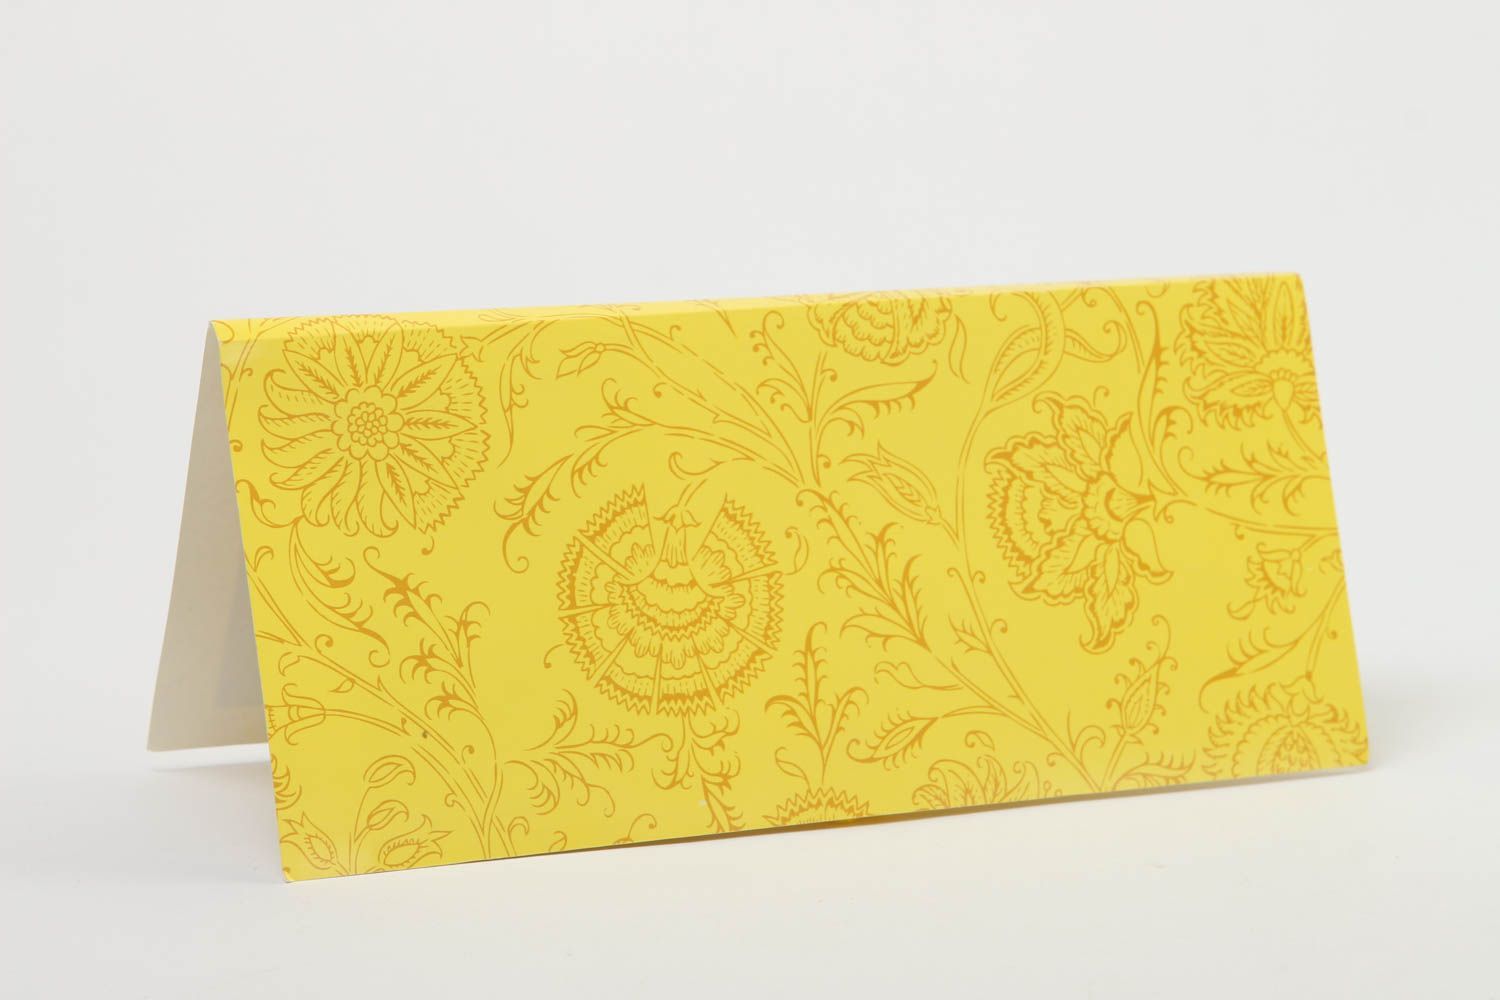 Handmade schöne Grusskarten Scrapbook Karten Papier Karten rechteckig gelb foto 4